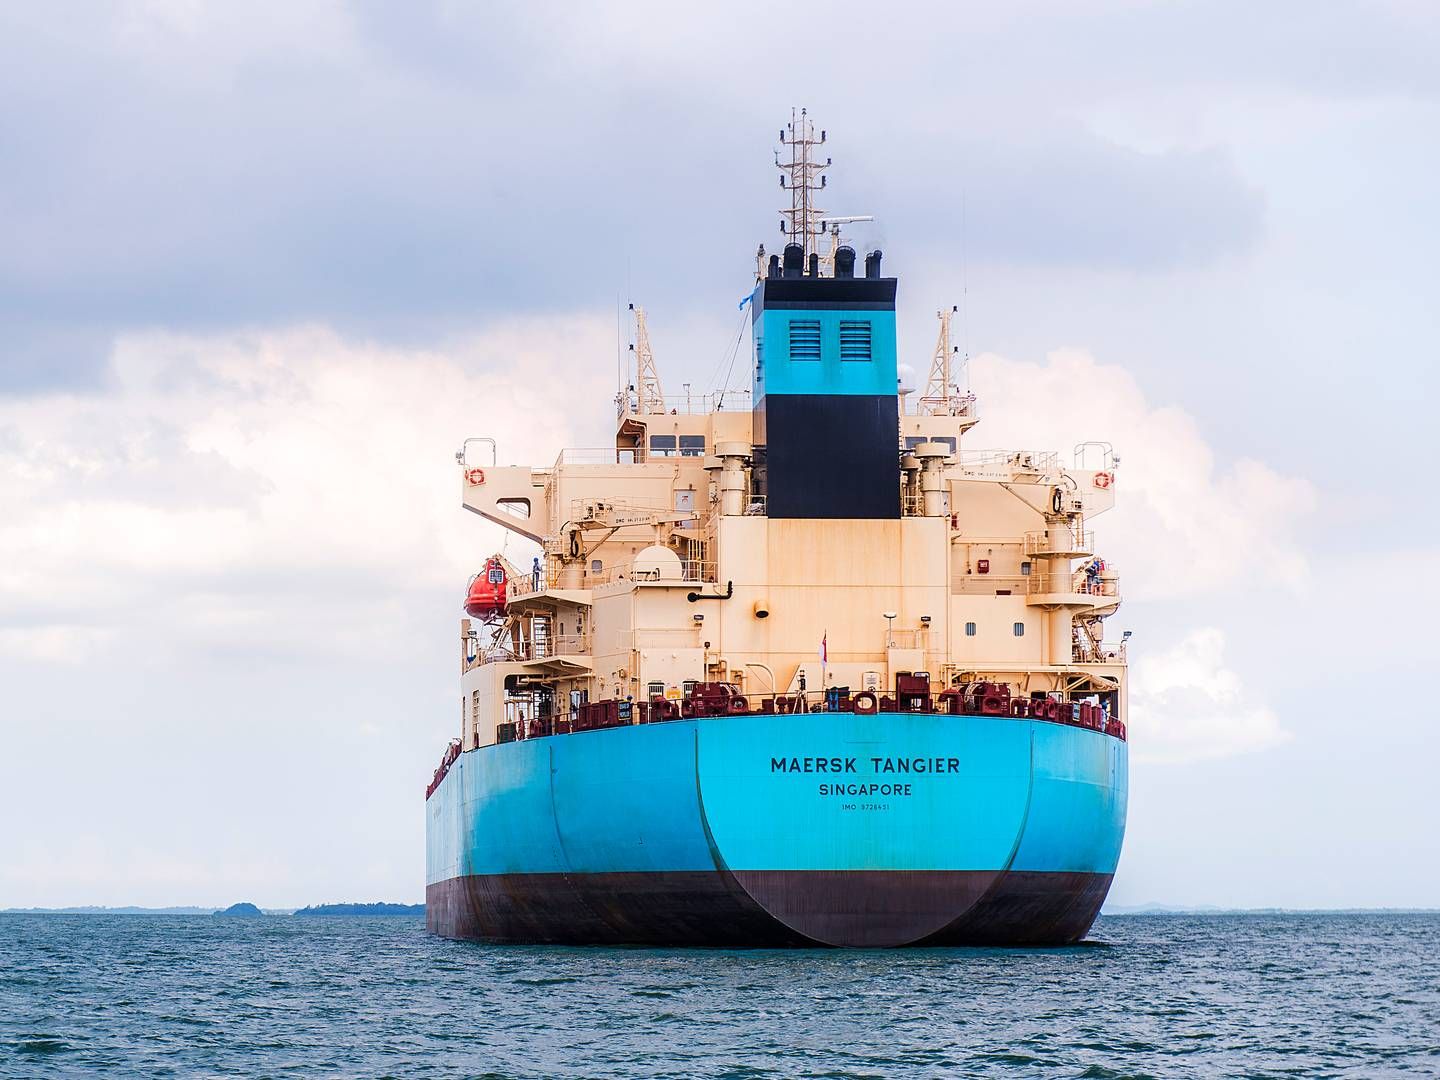 Foto: Pr / Maersk Tankers